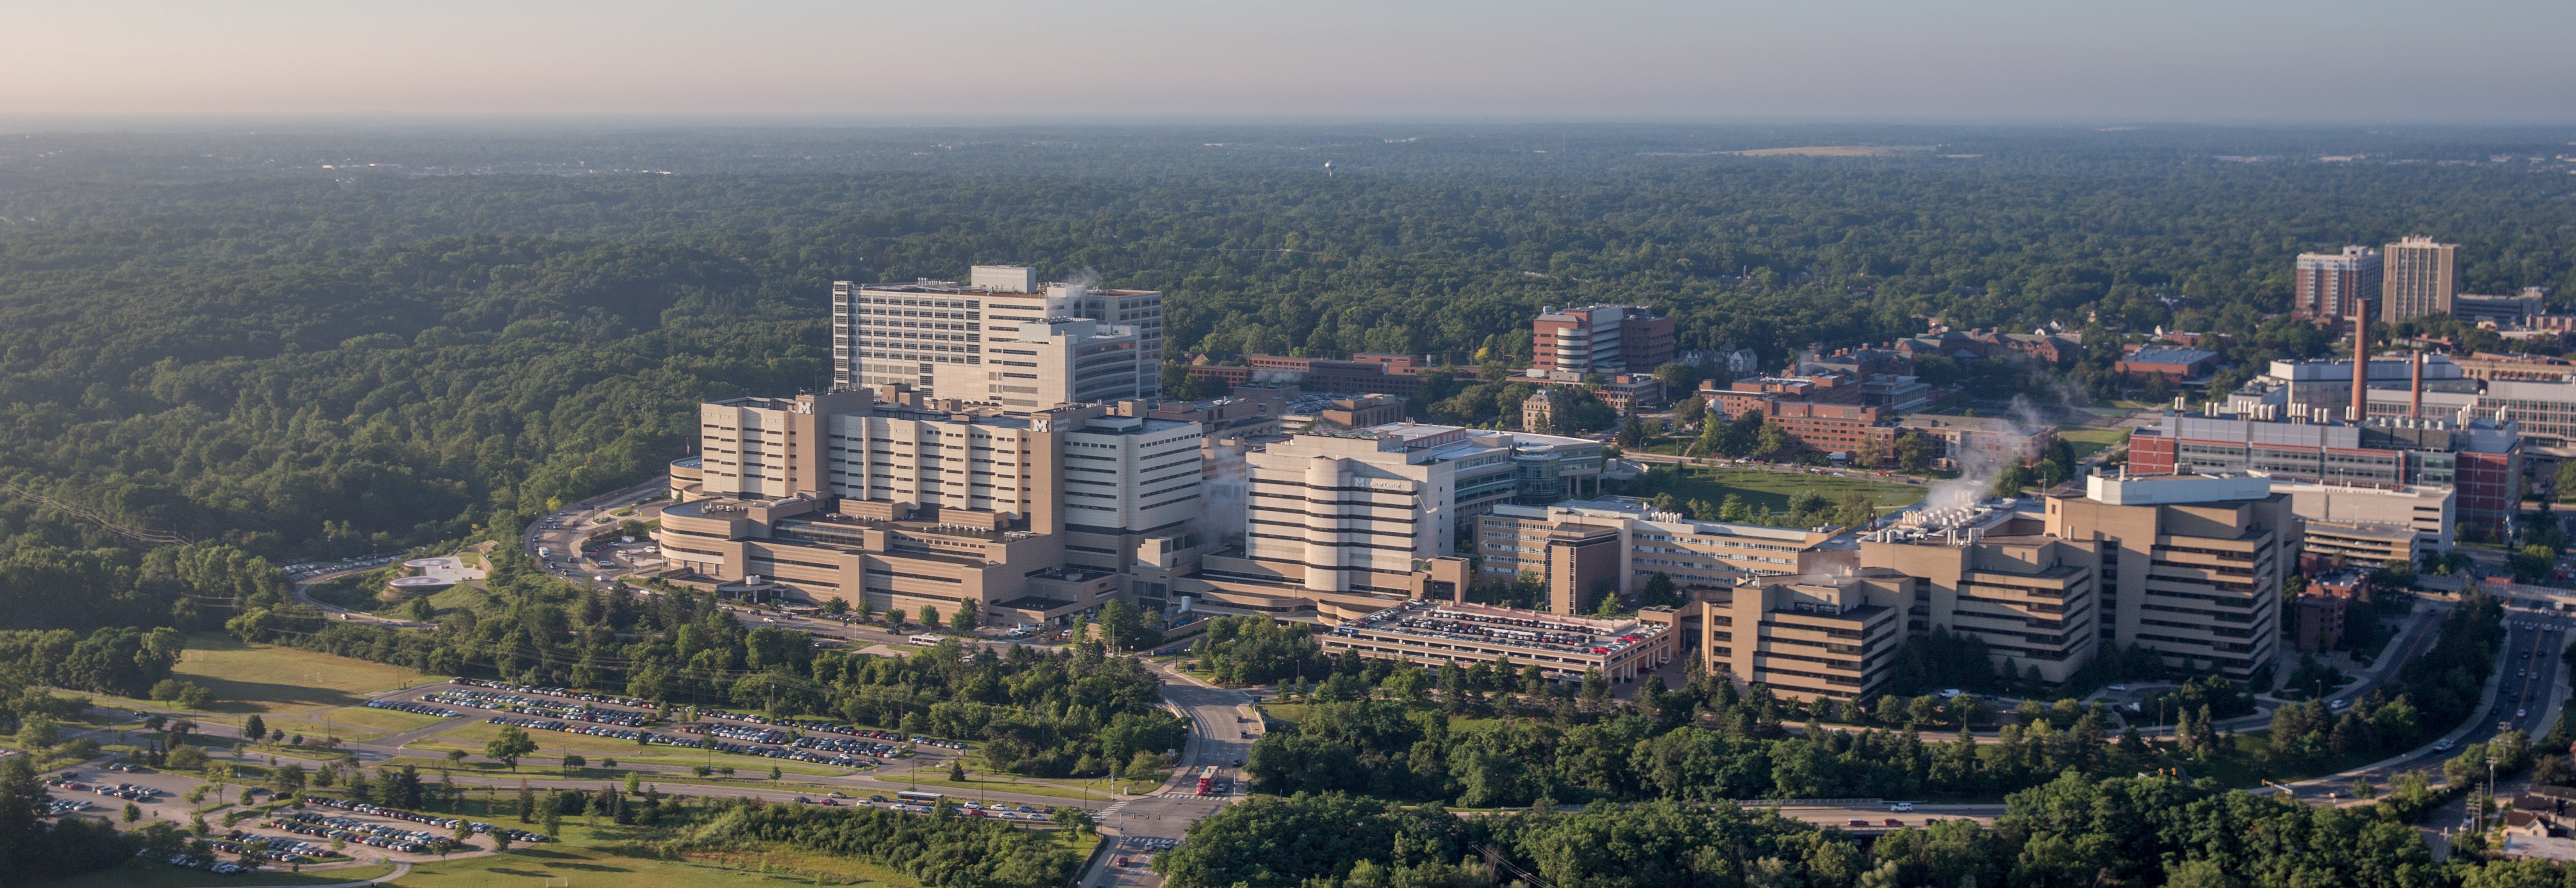 Aerial view of University of Michigan medical campus